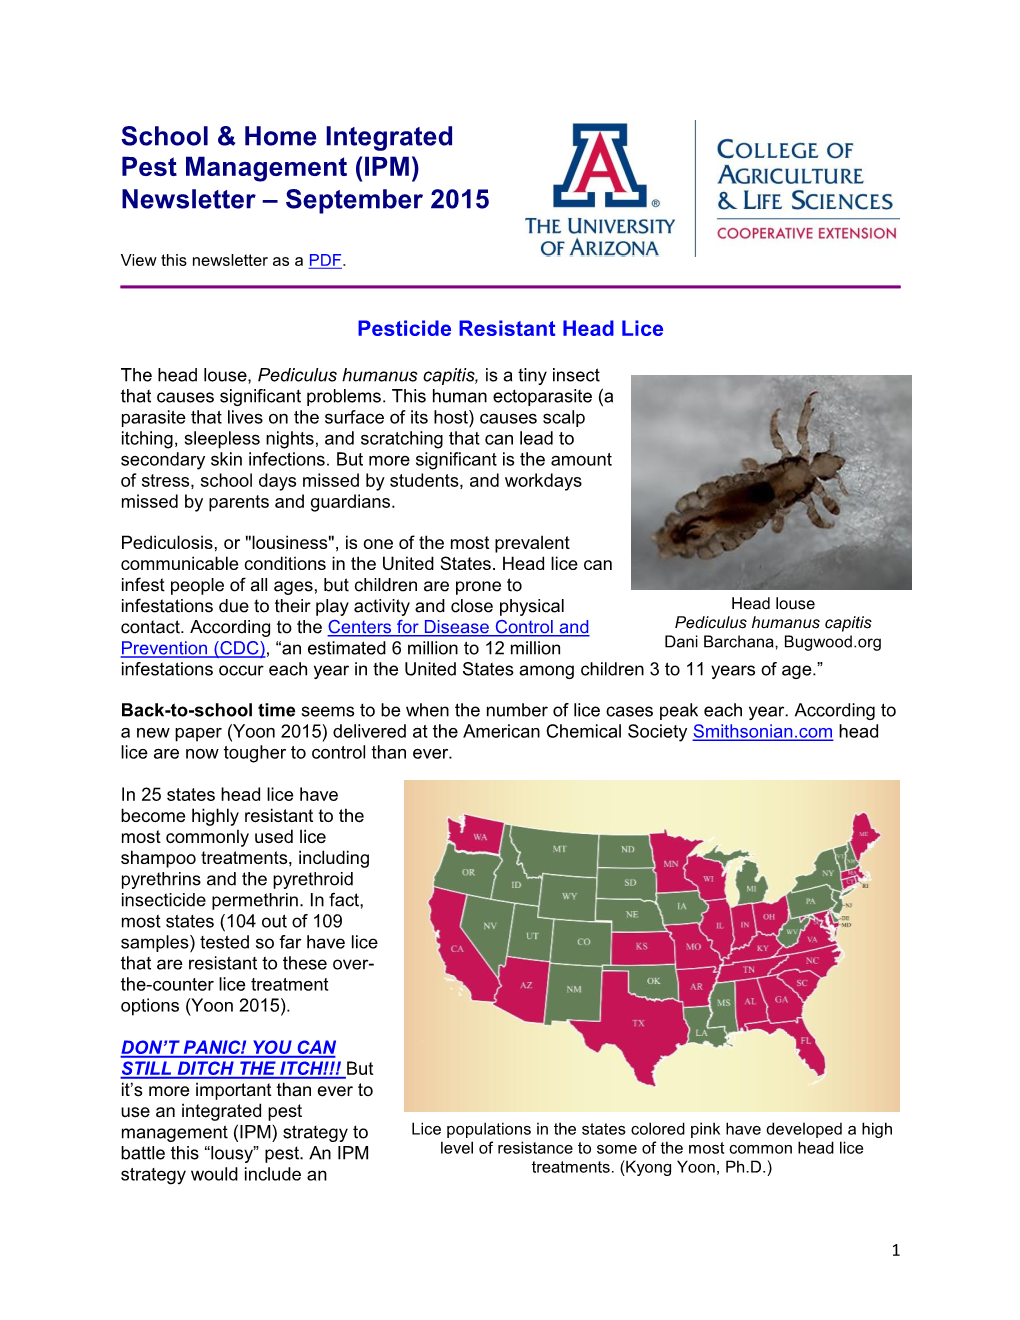 Head Lice Pest Press, September 2015